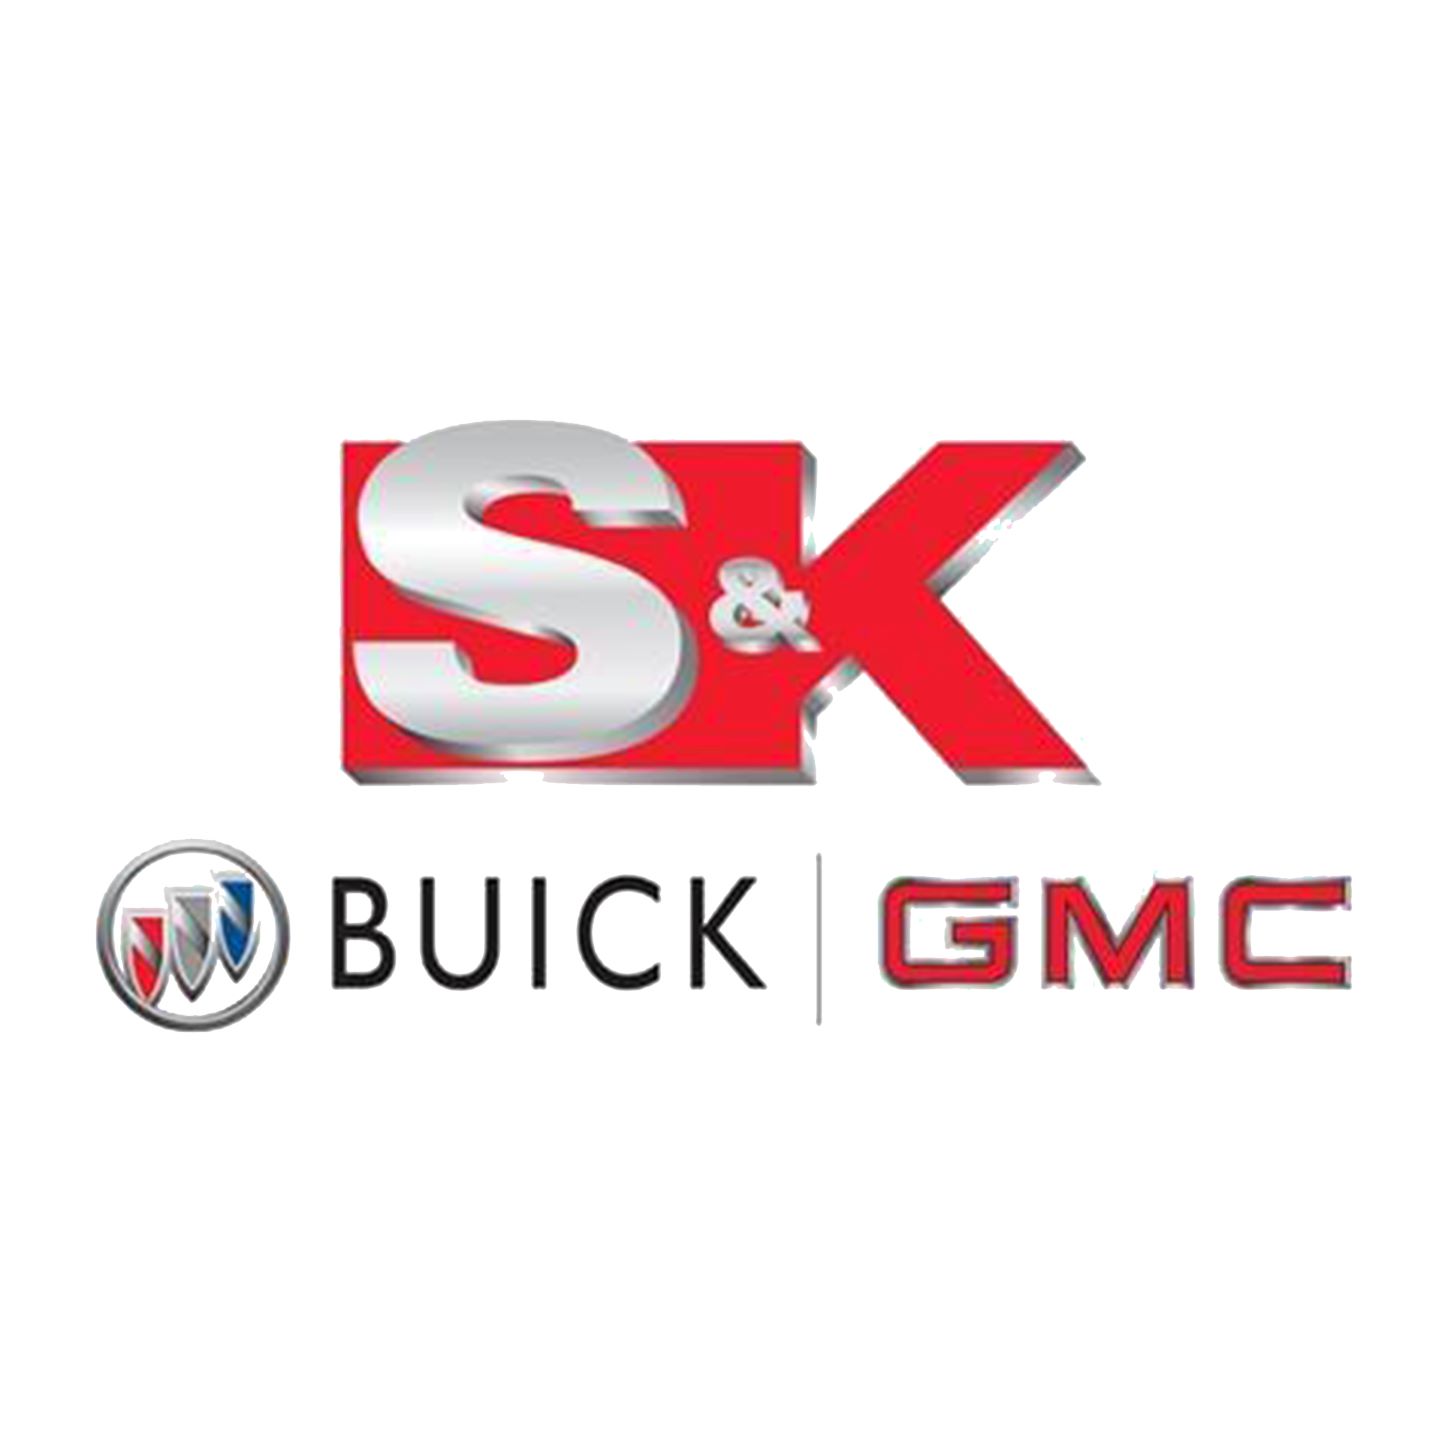 B. S&K Buick (Silver)